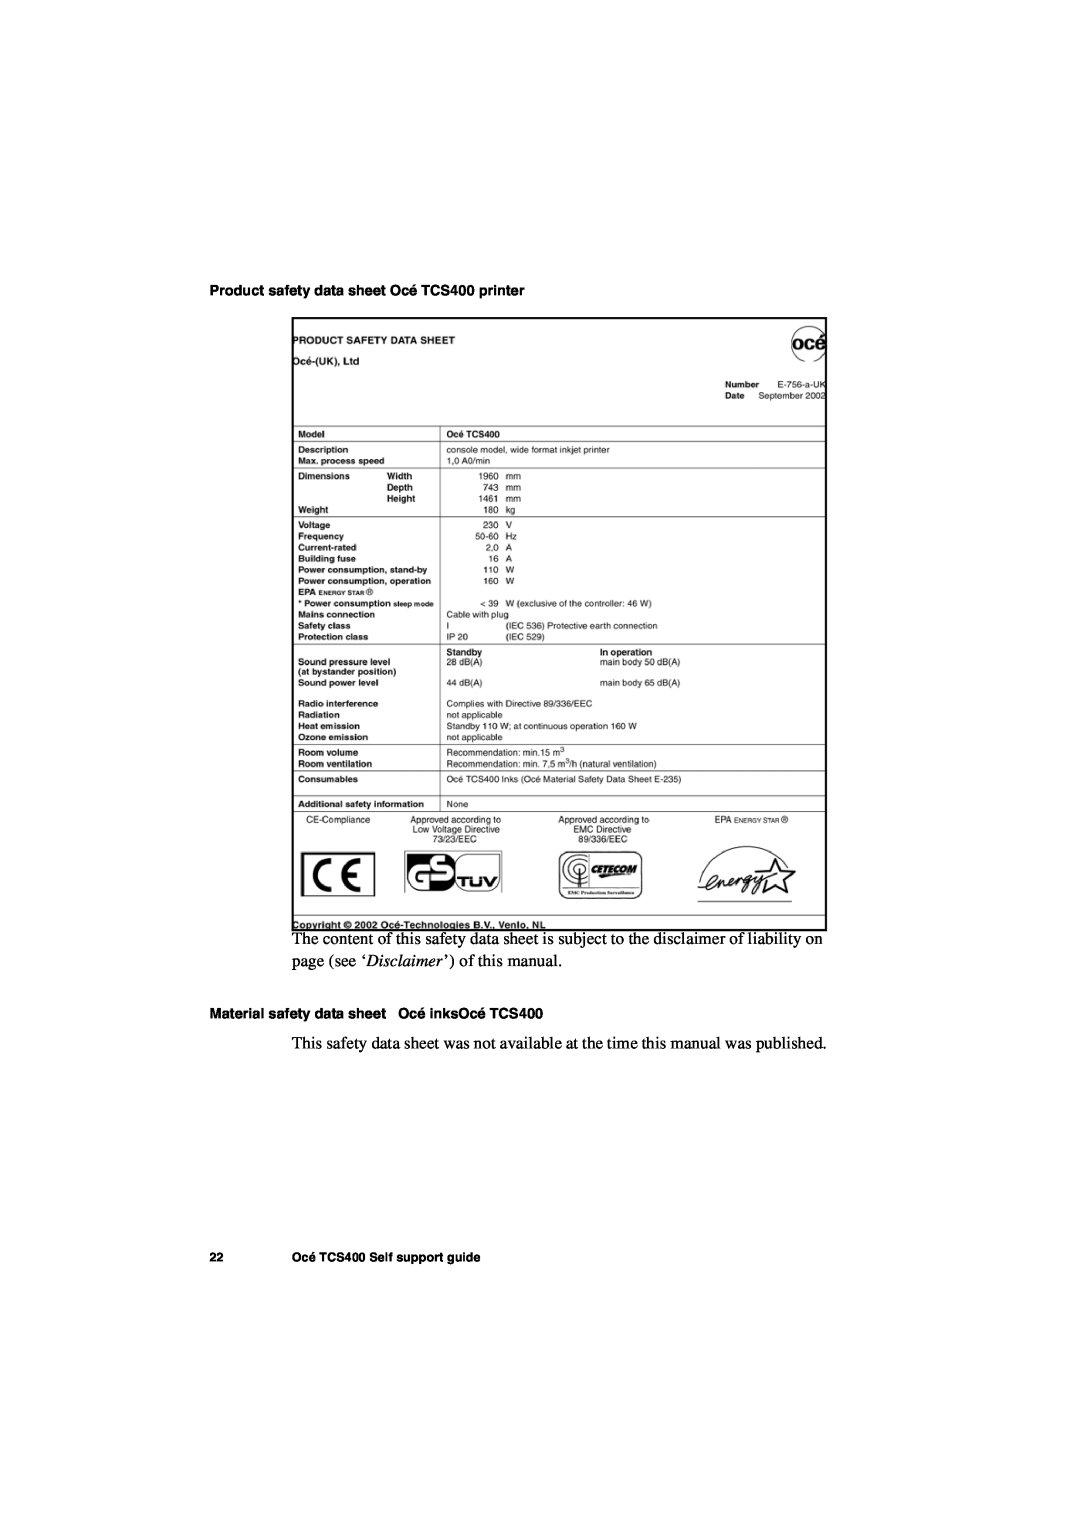 Oce North America manual Product safety data sheet Océ TCS400 printer, Material safety data sheet Océ inksOcé TCS400 